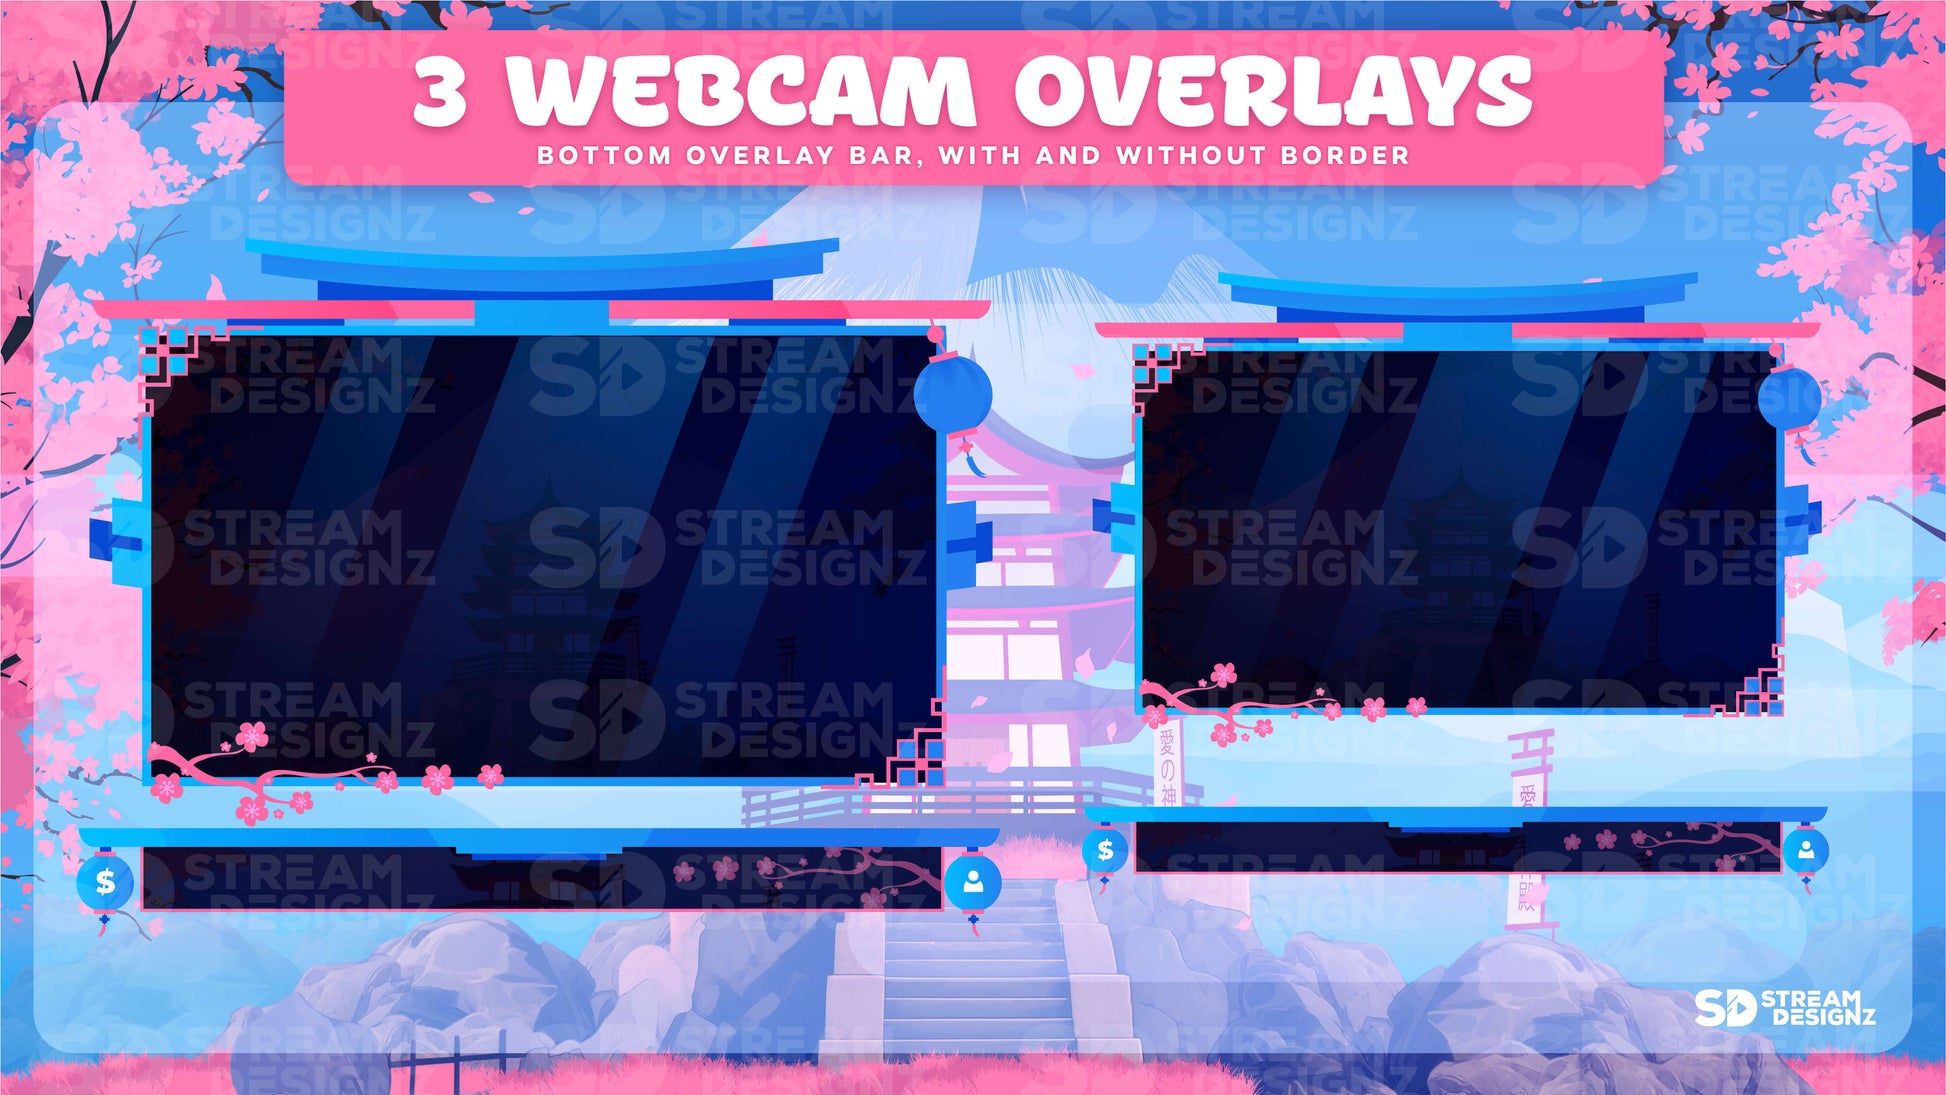 static stream overlay package 3 webcam overlays sakura chill stream designz